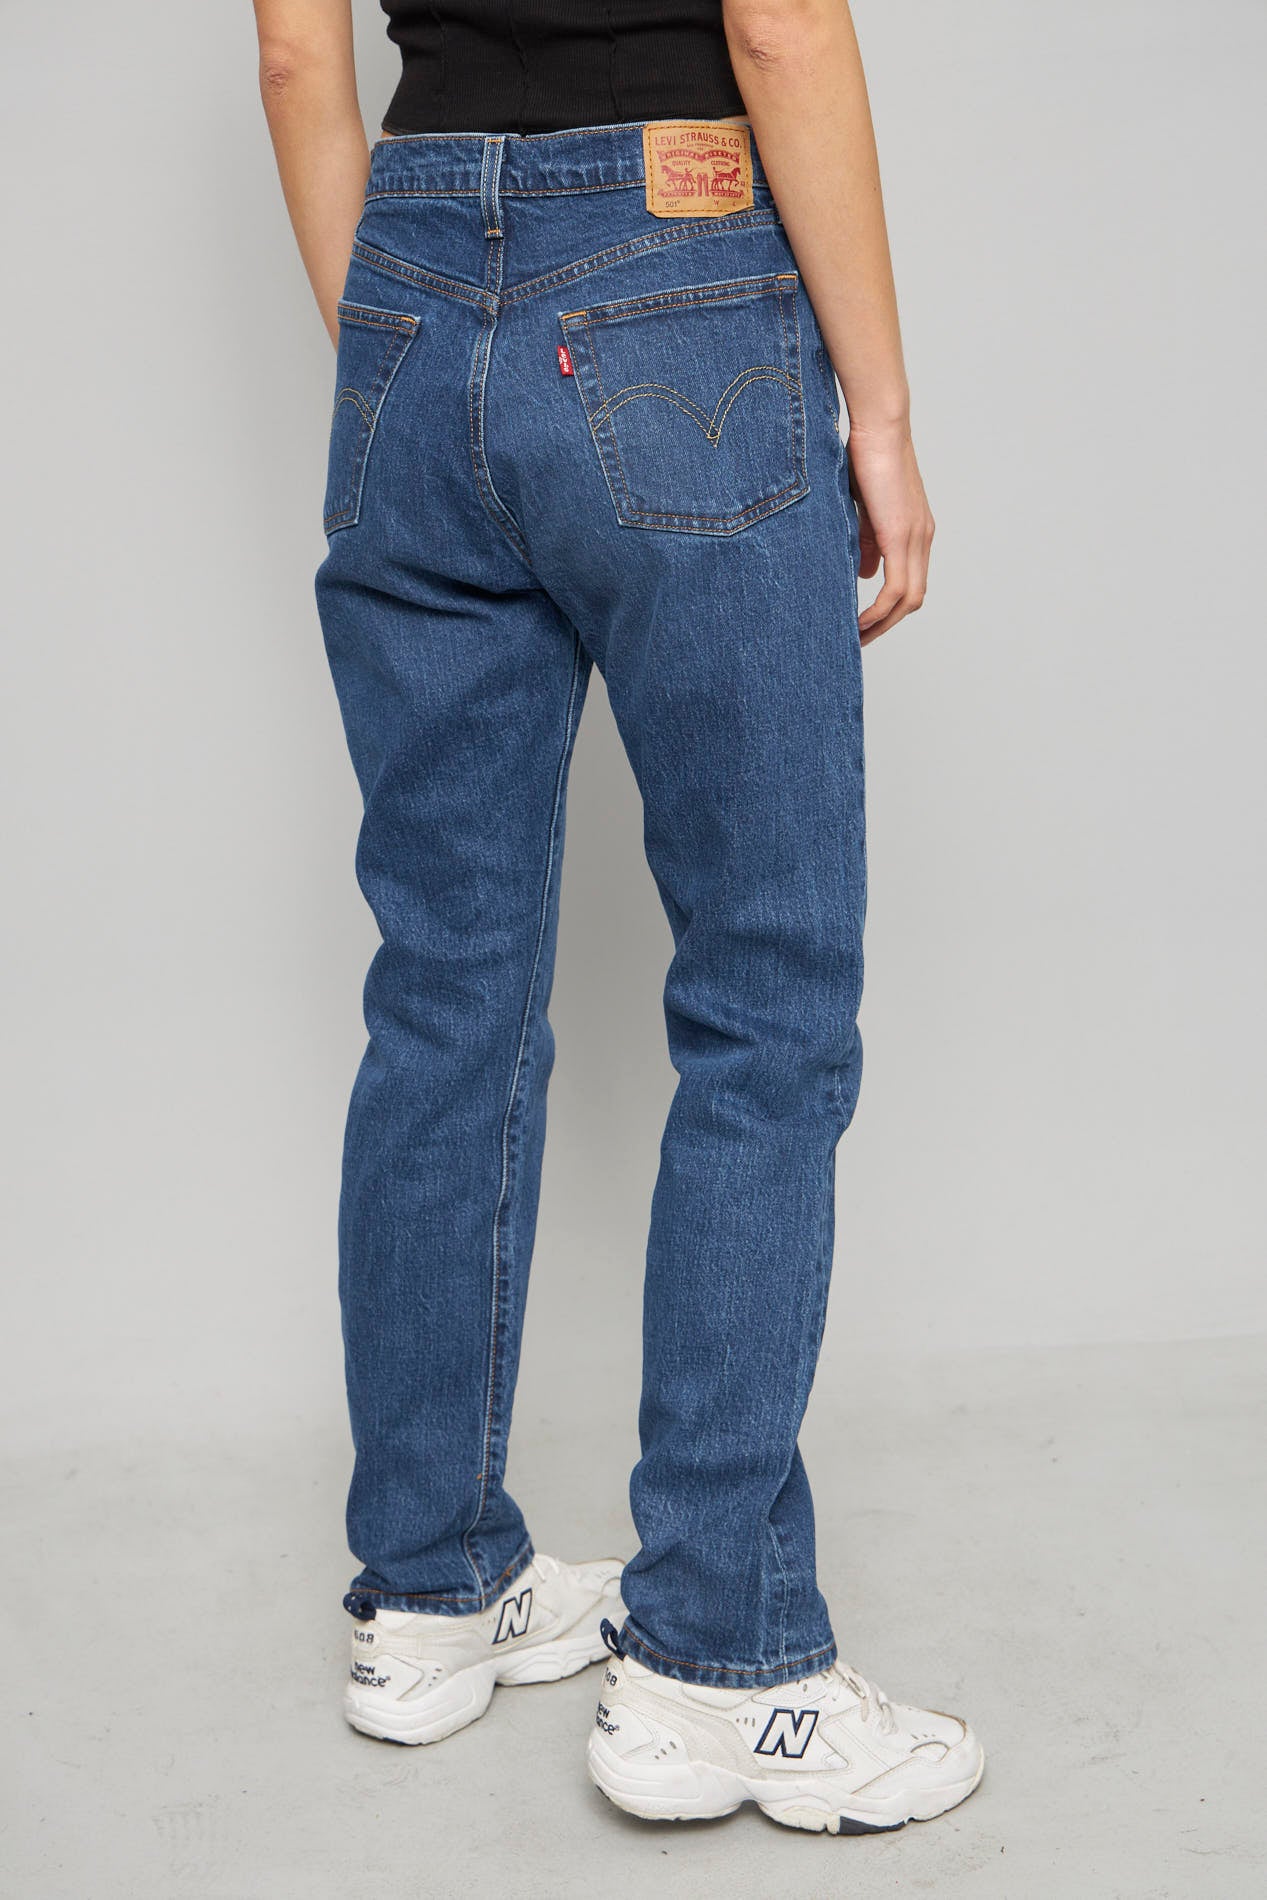 Jeans casual  azul levis talla 38 543